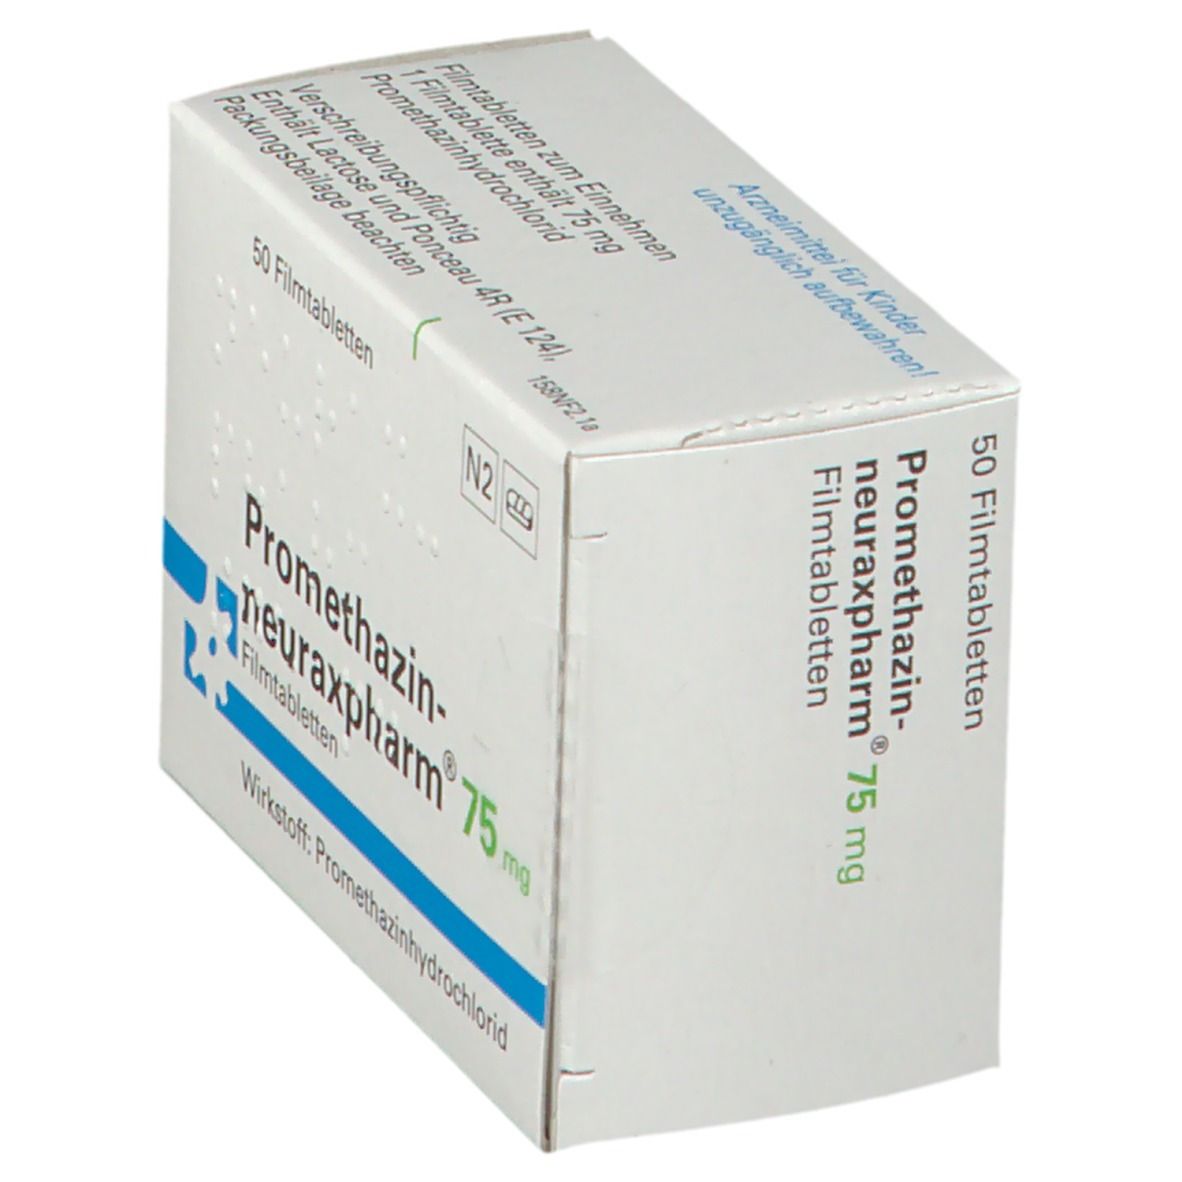 Promethazin-neuraxpharm® 75 mg